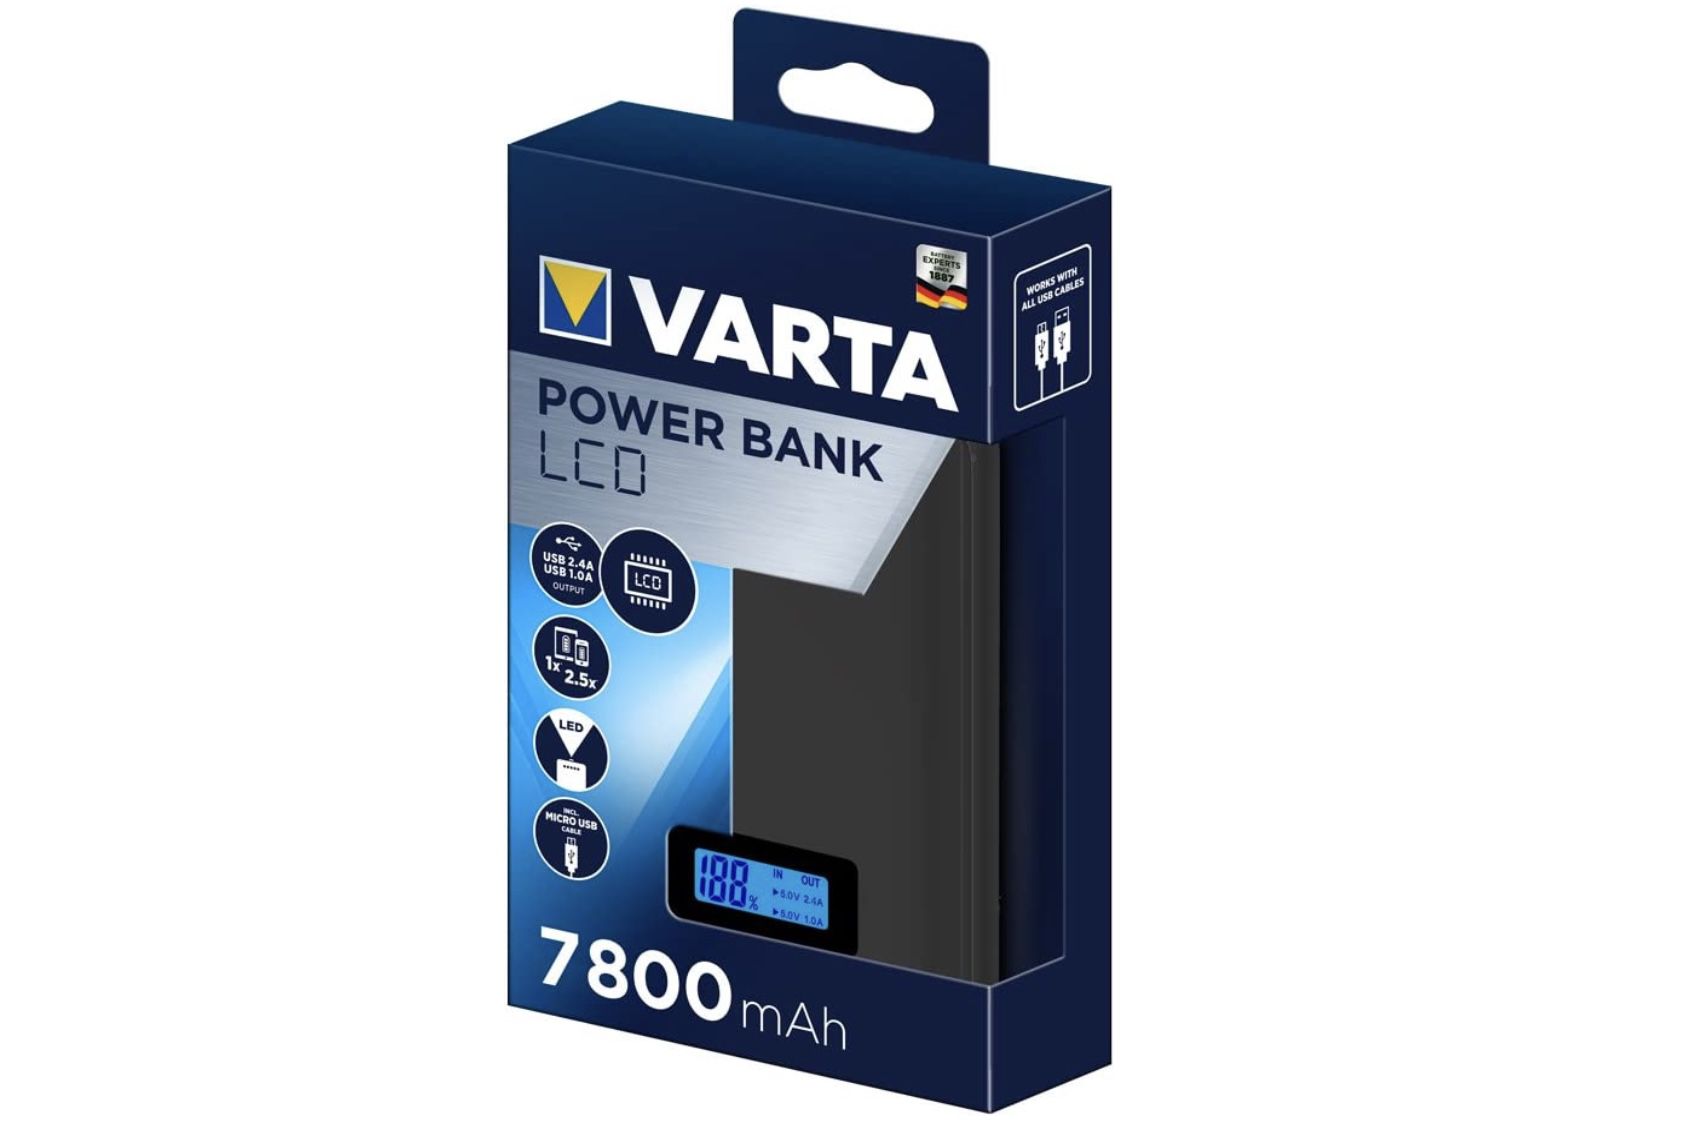 VARTA 7800mAh Power Bank mit LCD Display für 15,96€ (statt 26€)   Prime